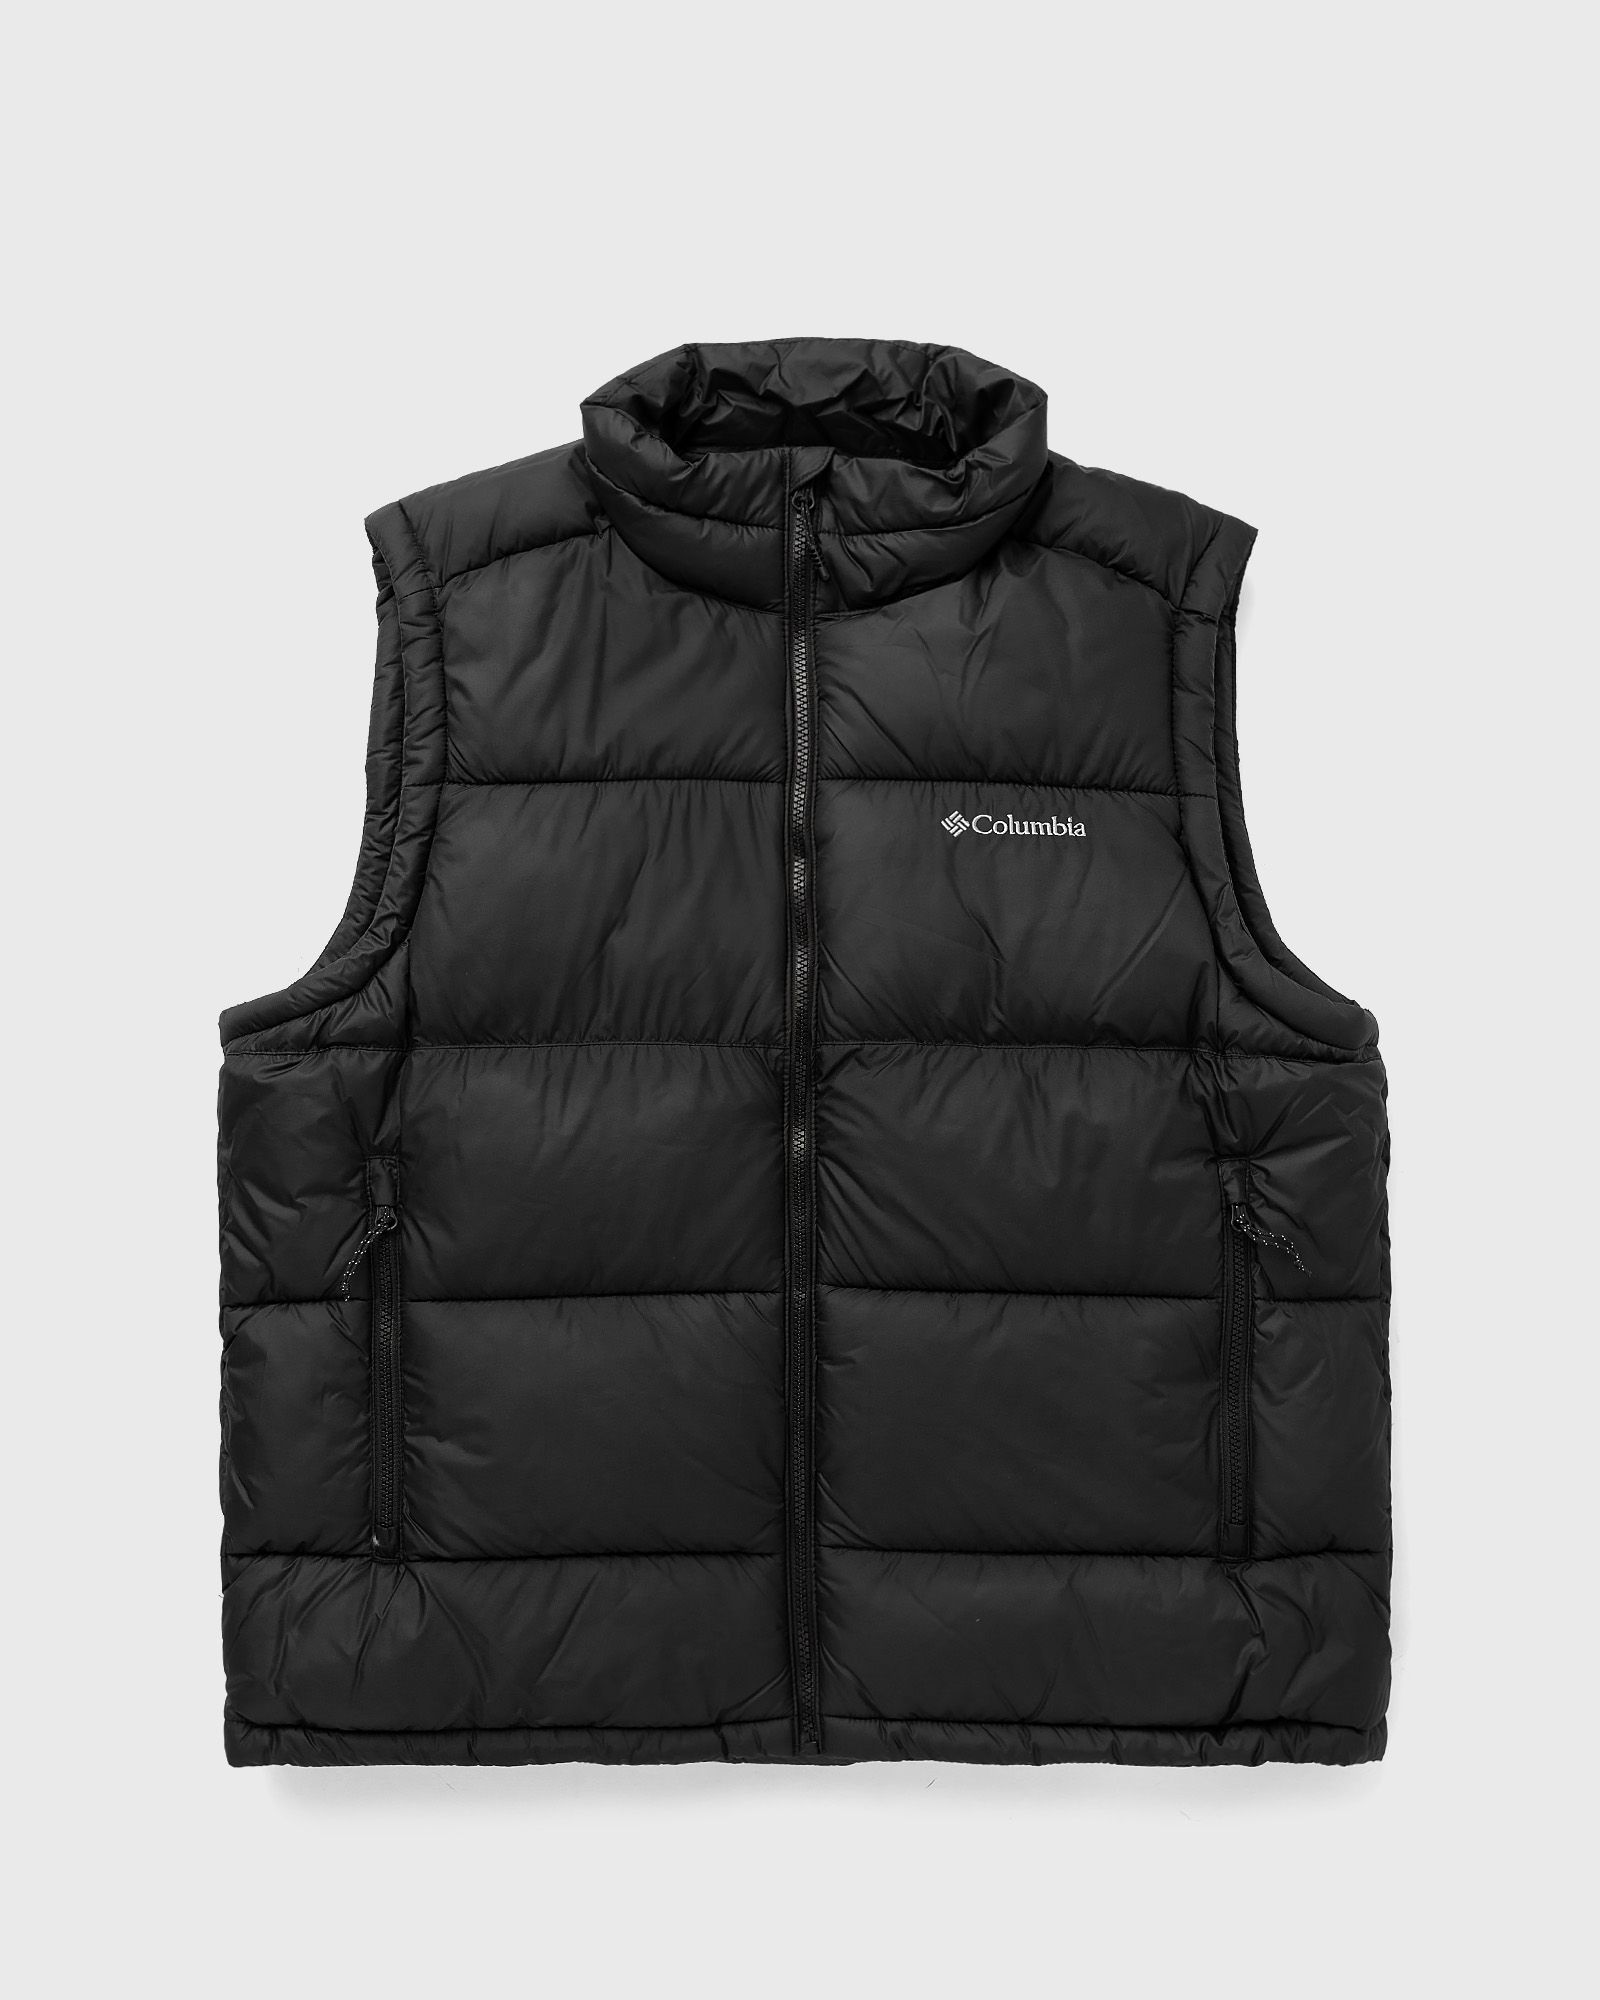 Columbia - pike lake ii vest men vests black in größe:xl